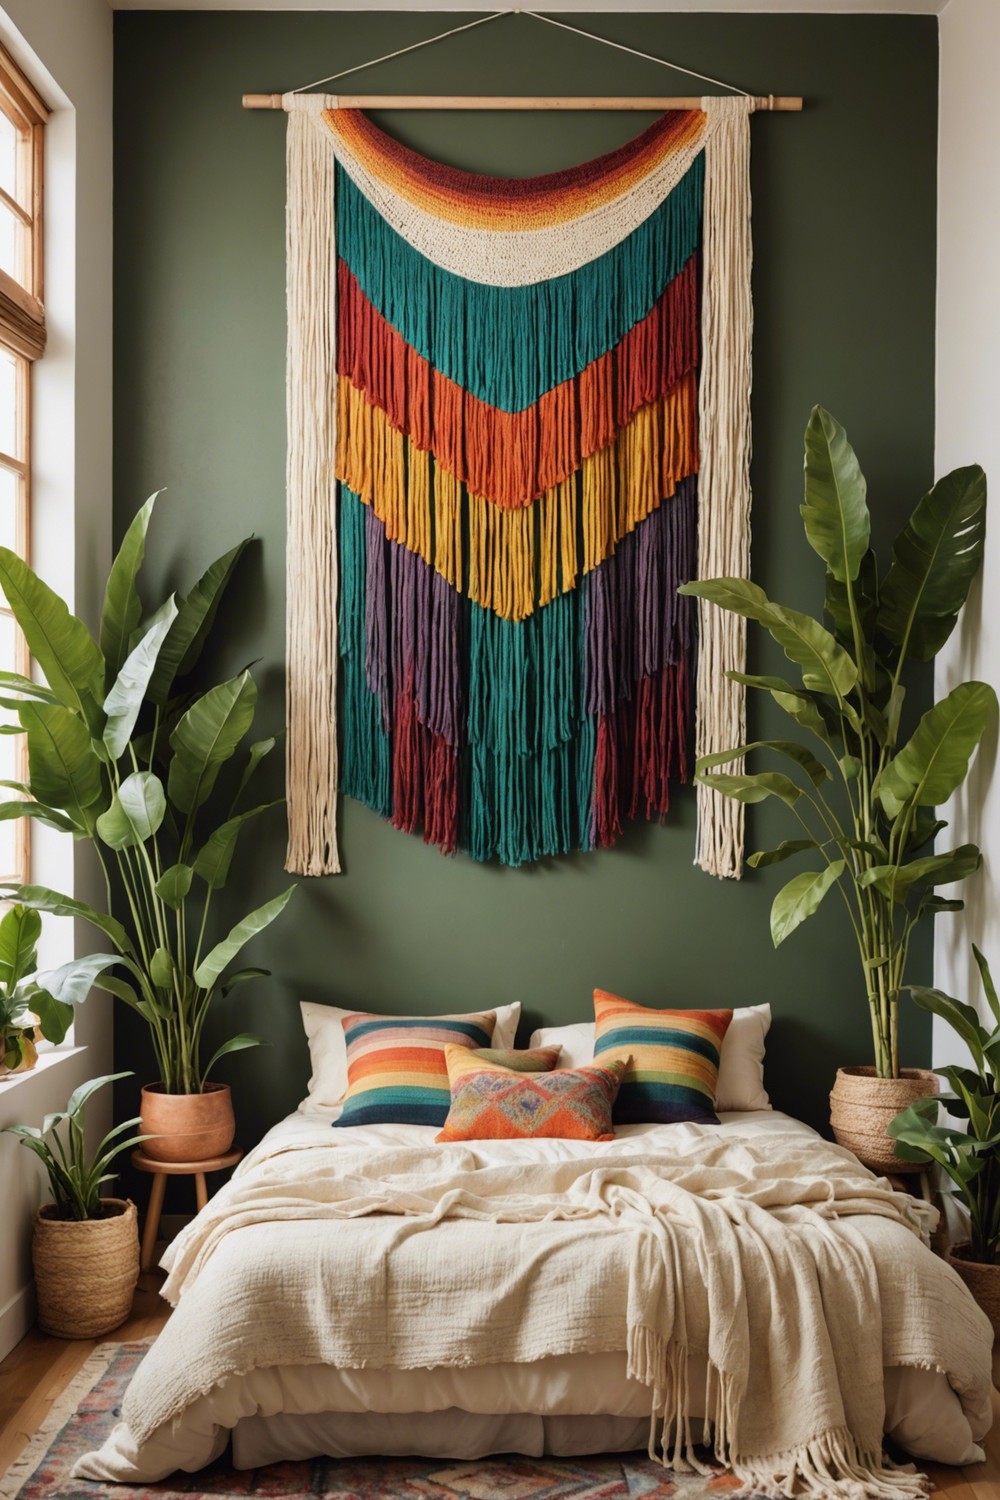 Fringed Wall Hangings with Rainbow Yarn